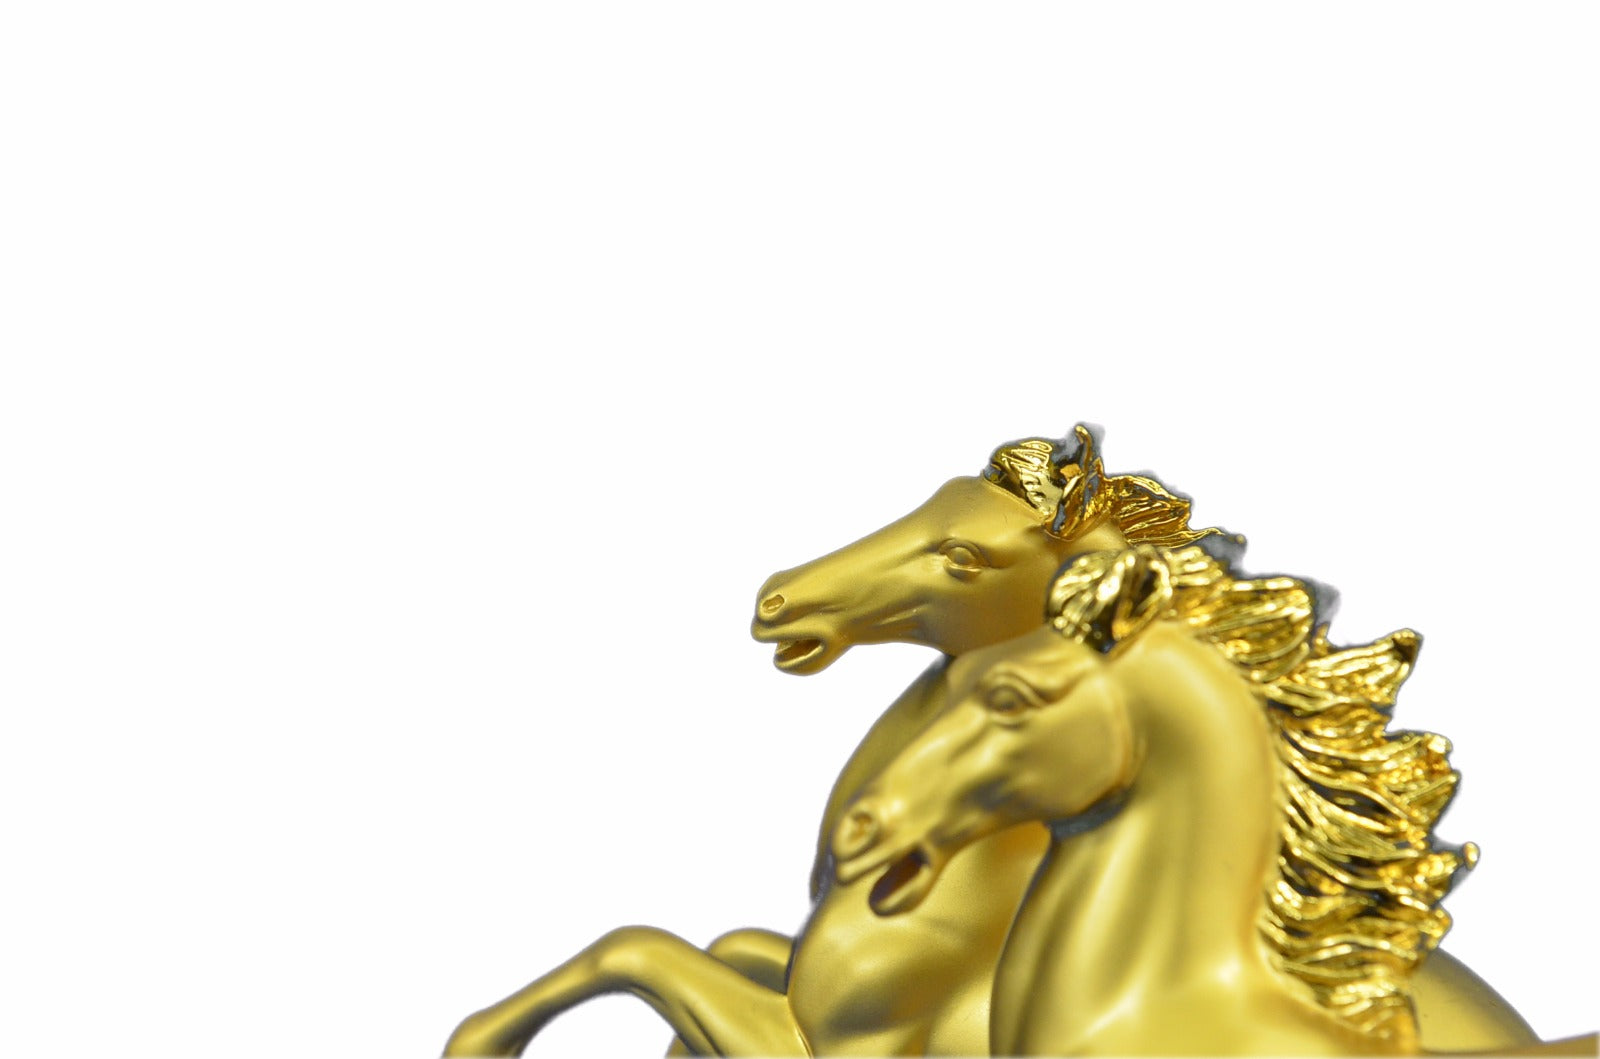 24K Gold Hot Cast Horses Classic Masterpiece Collectible Artwork Bronze Figurine